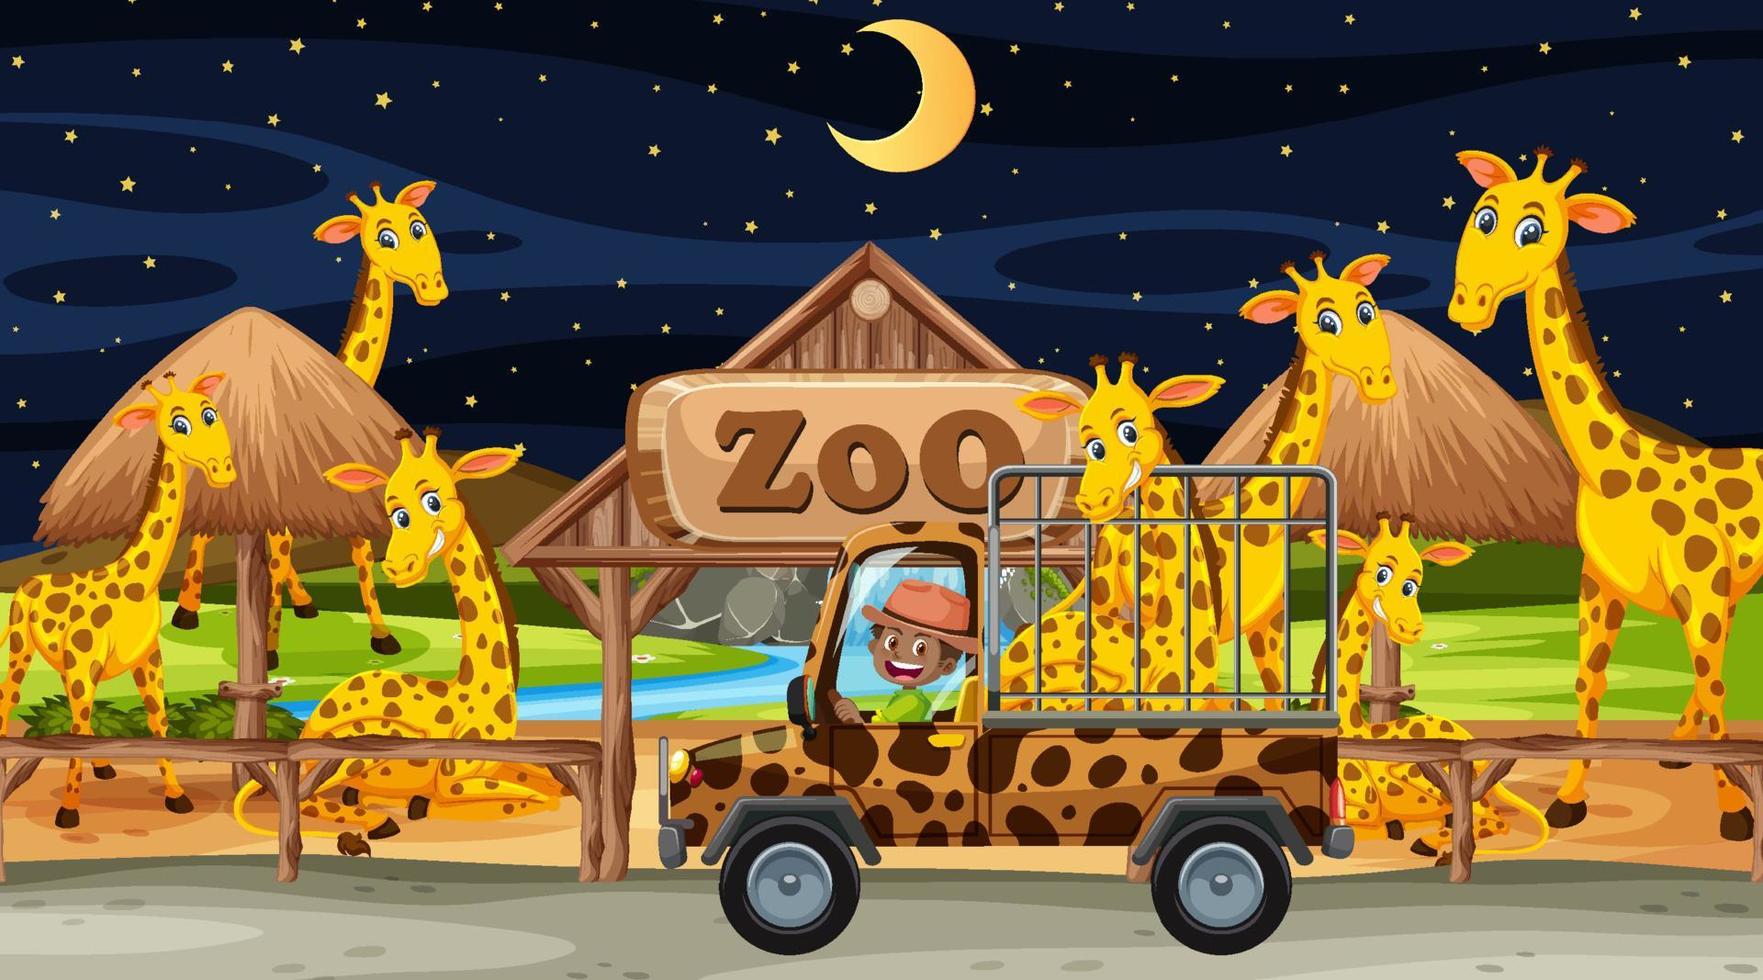 Safari at night scene with giraffe group in the cage car vector